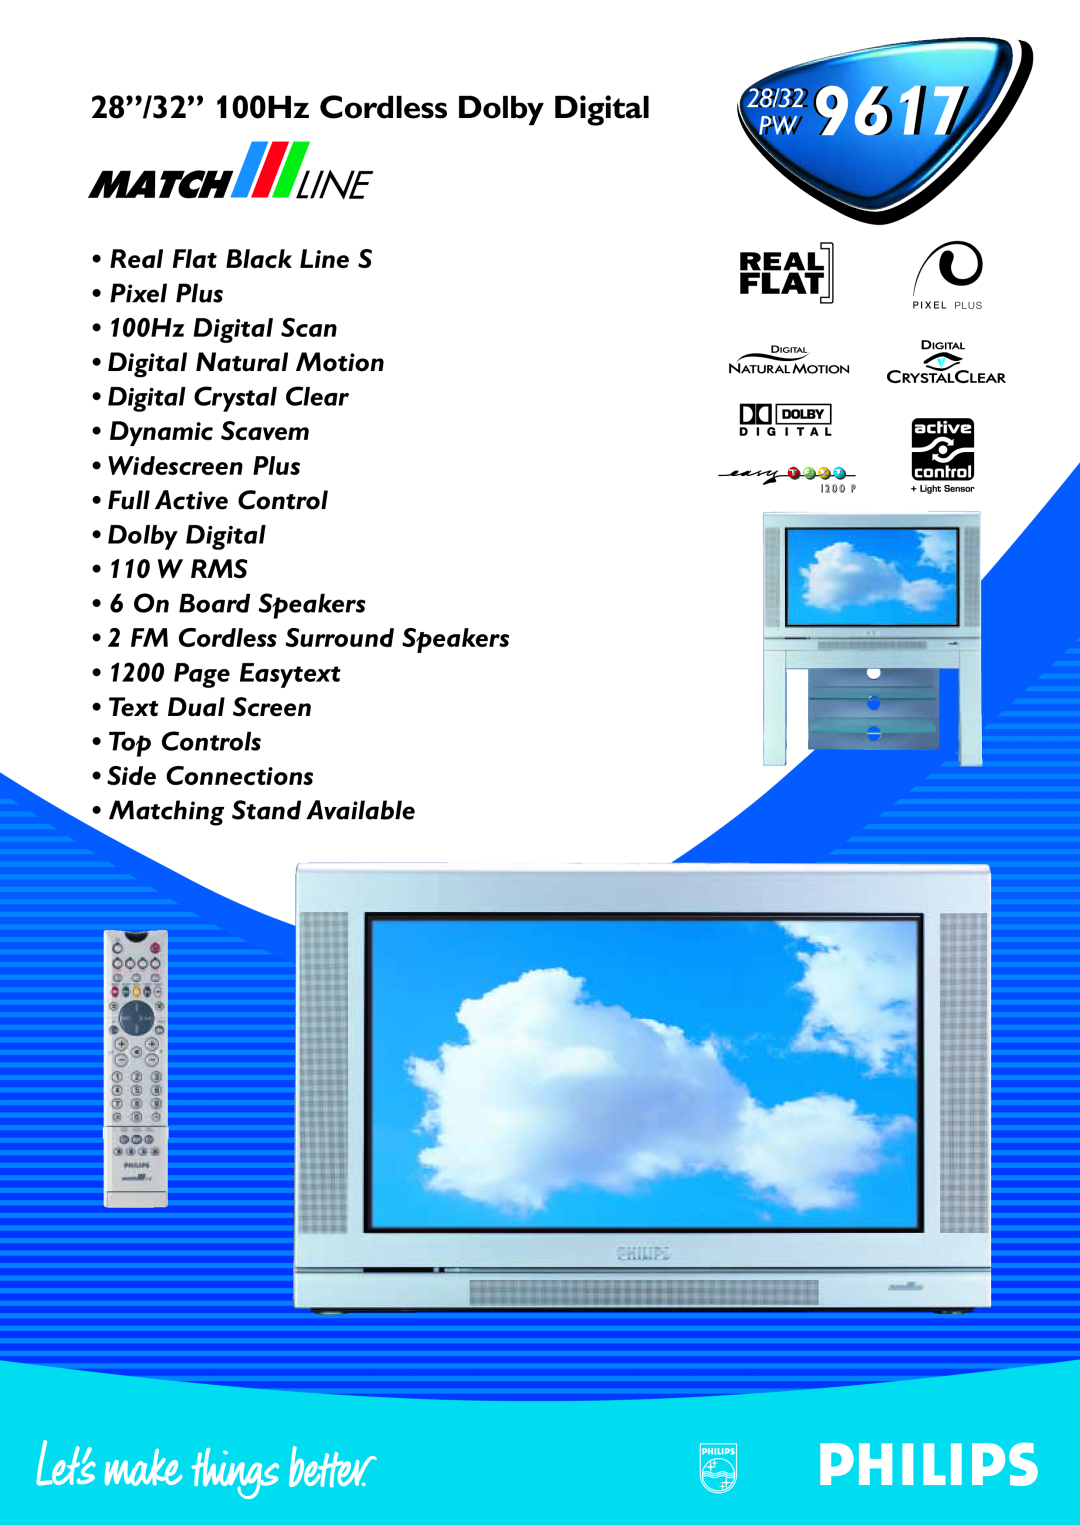 Philips 32PW 9617 manual 28”/32” 100Hz Cordless Dolby Digital, PWPW 9, Real Flat Black Line S Pixel Plus, 28/32 28/32 